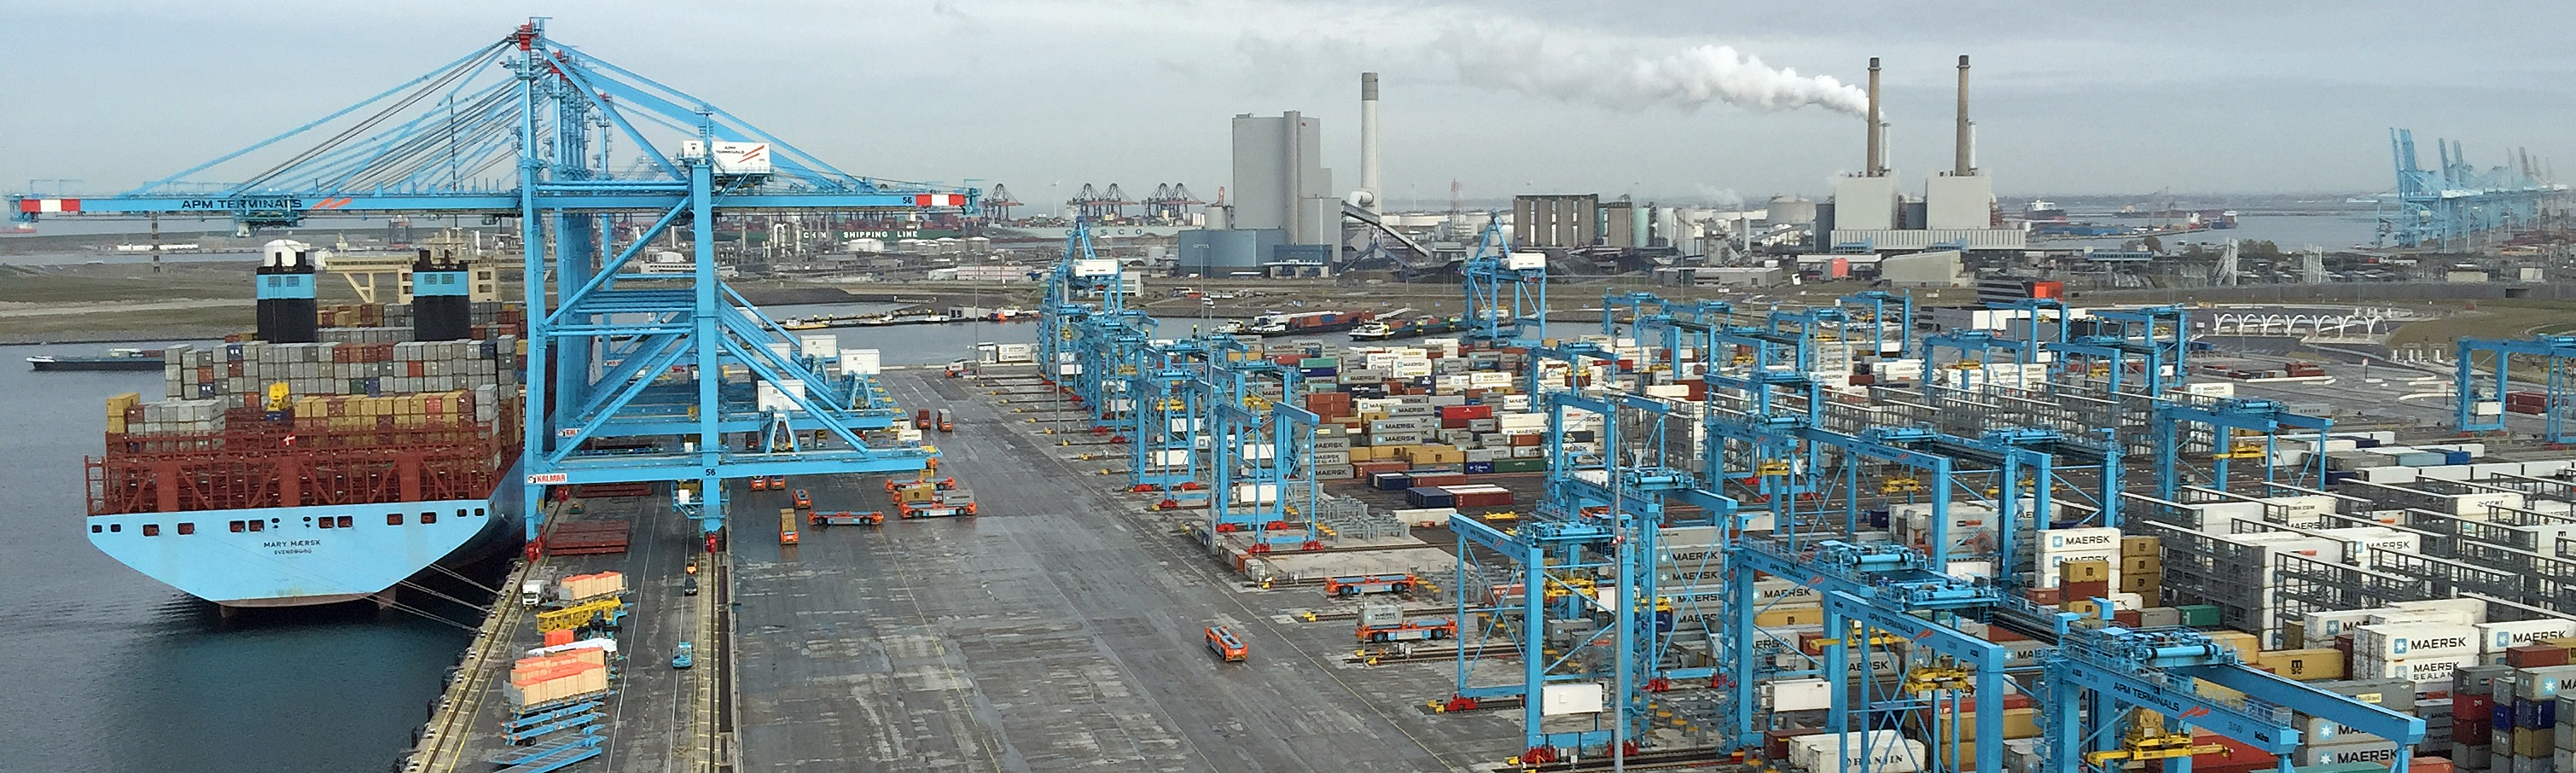 Remote controlled cranes at APM Terminals Maasvlakte 2, Rotterdam.